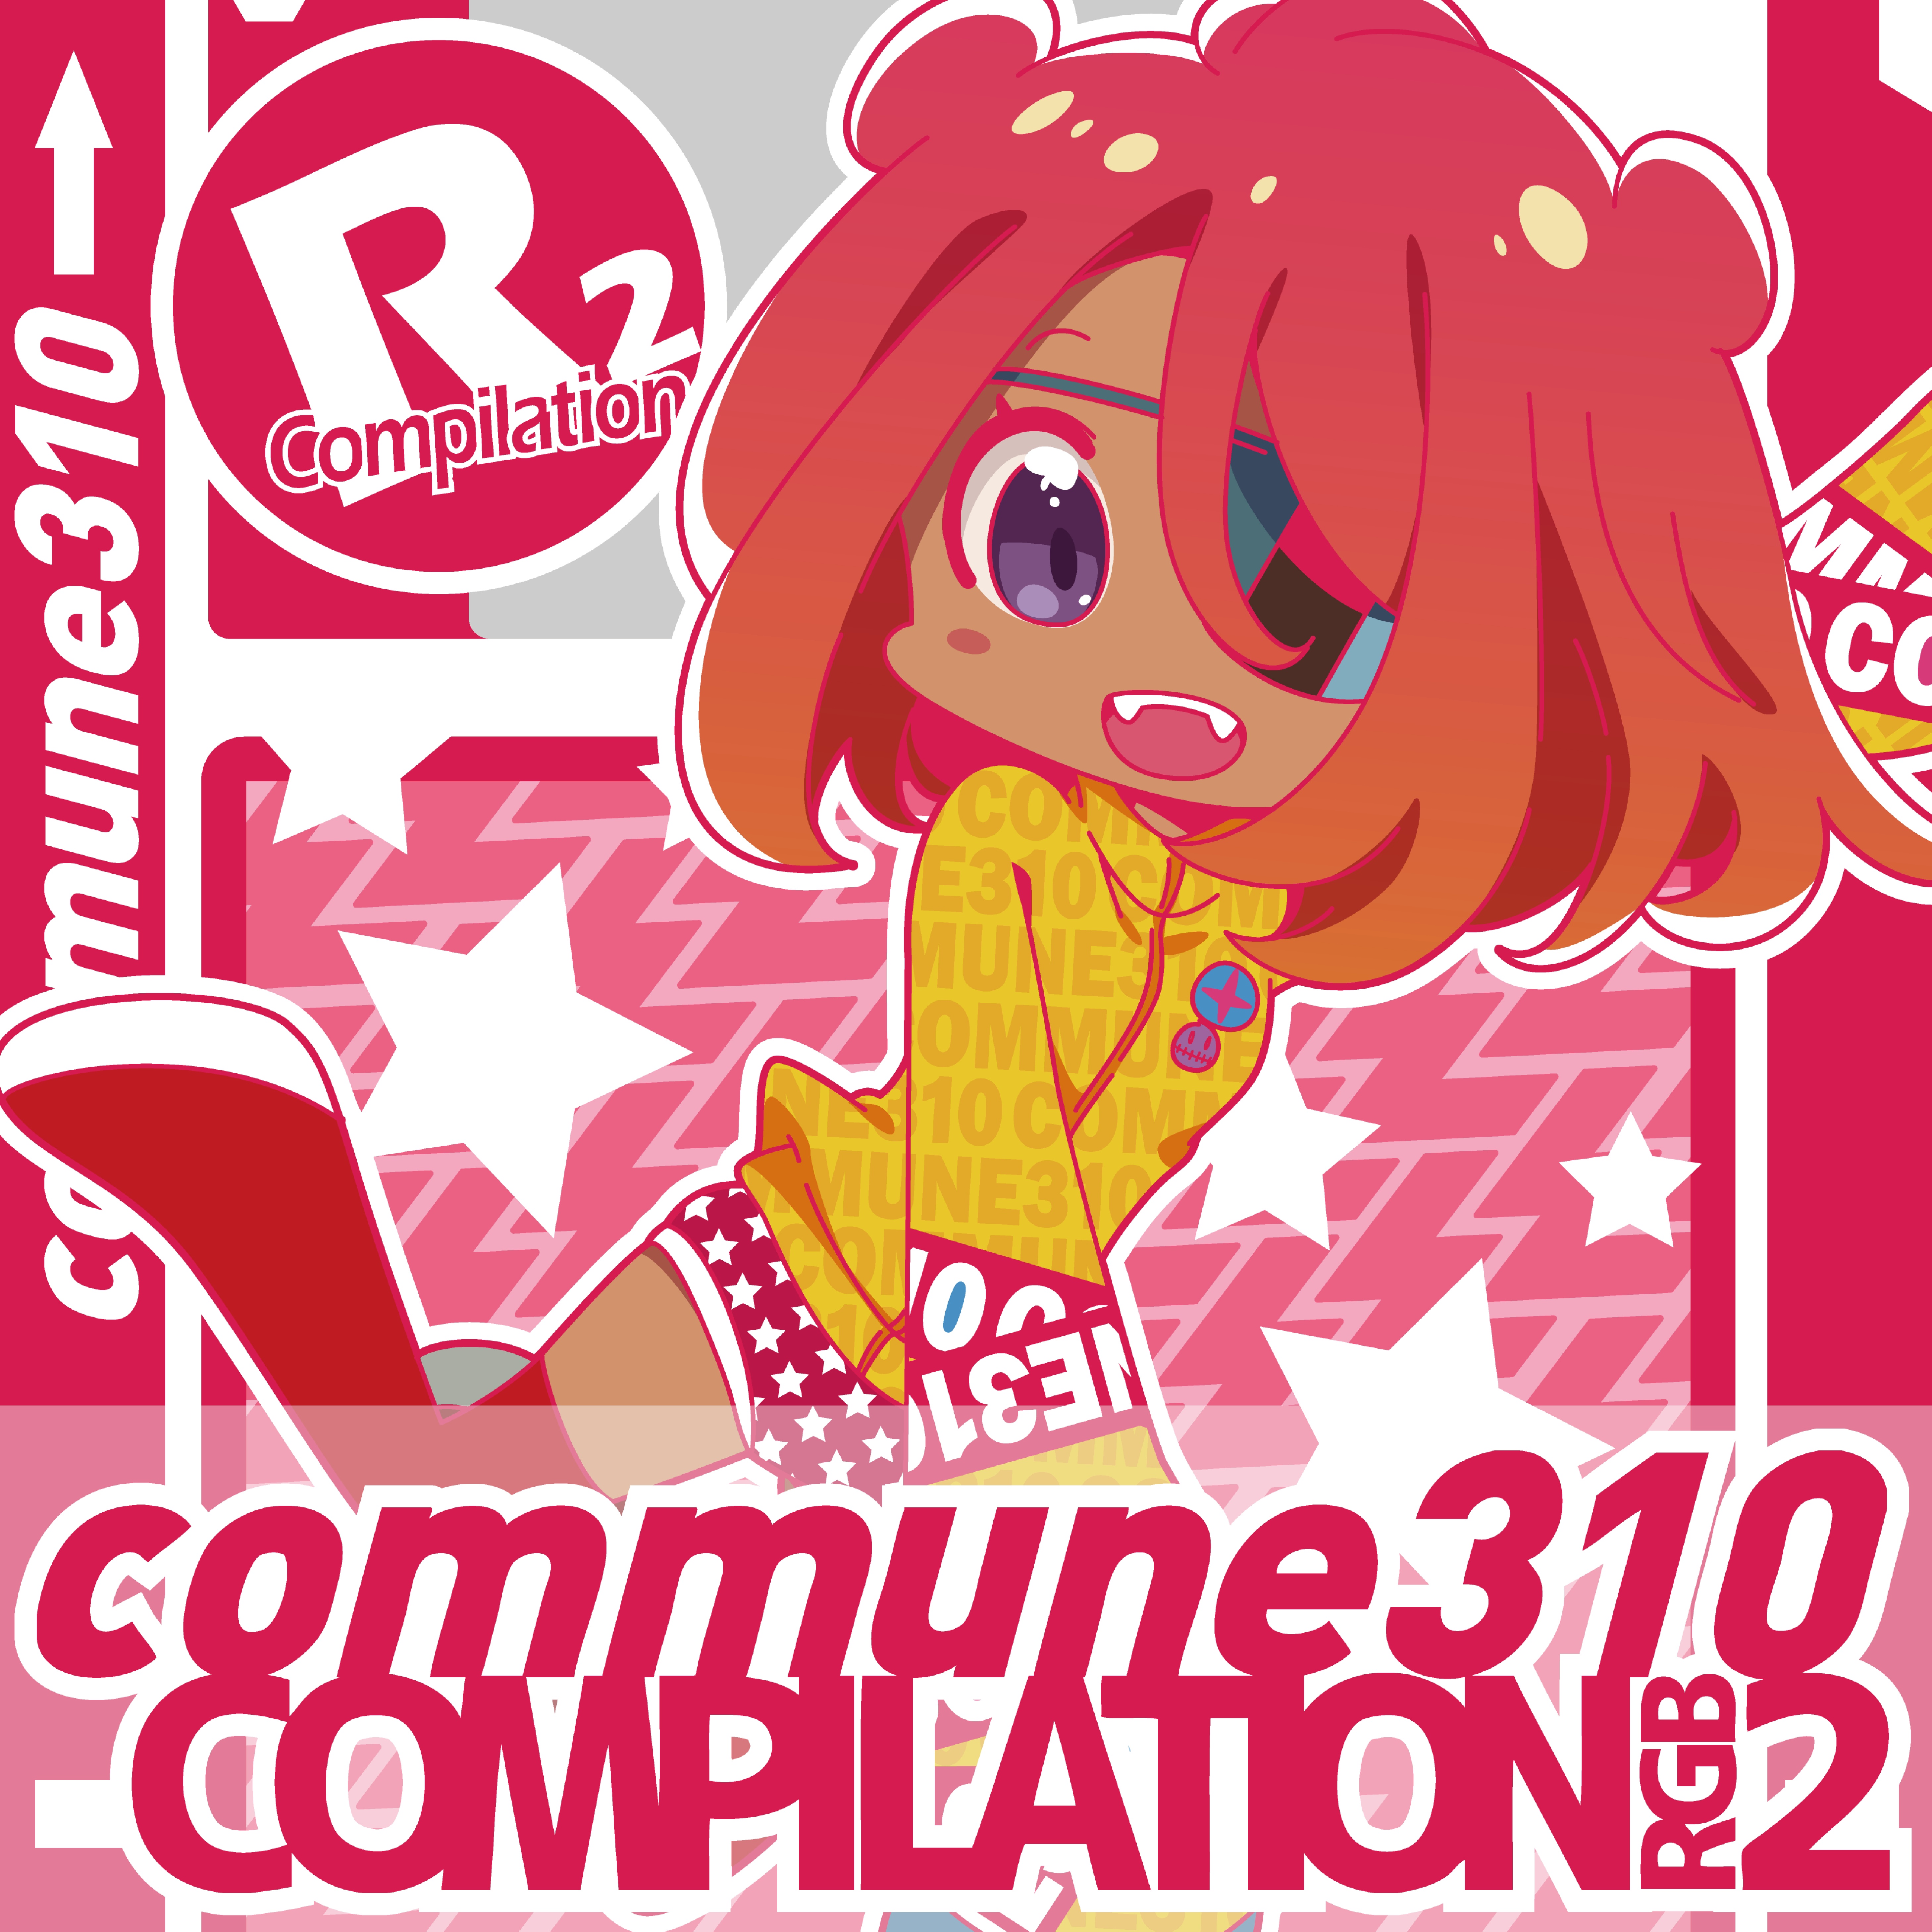 commune310 compilation R2